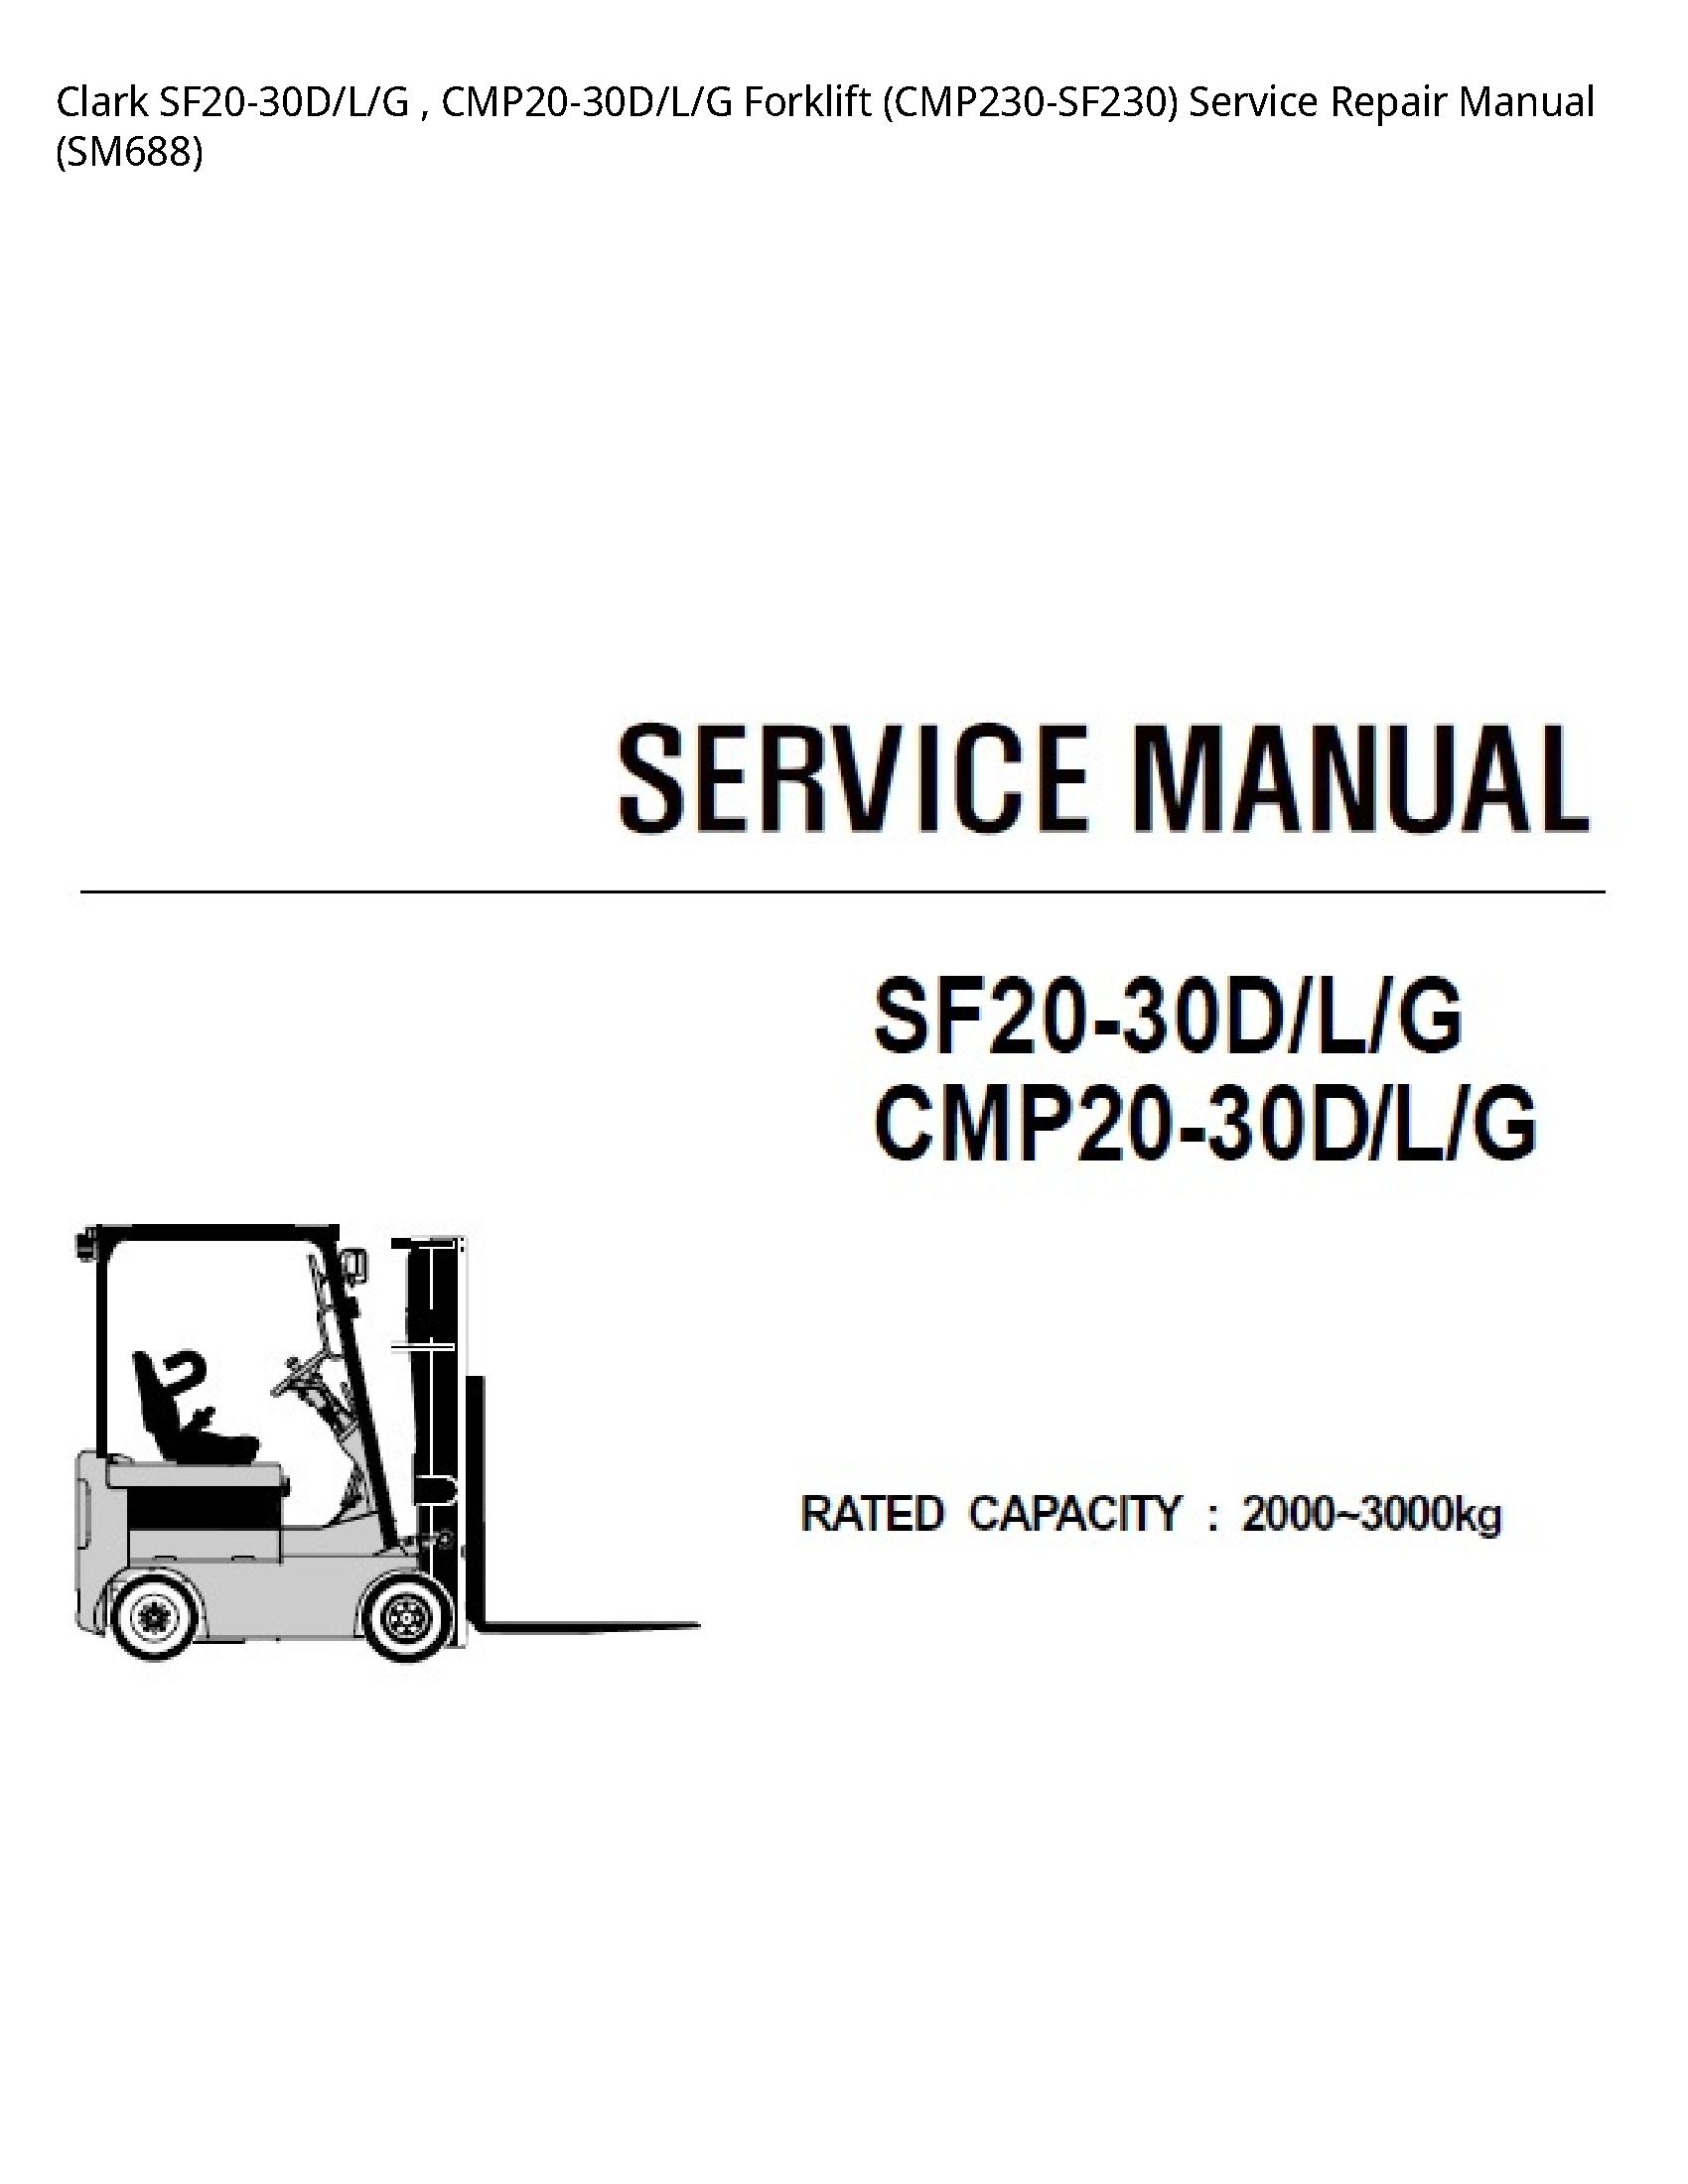 Clark SF20-30D Forklift manual